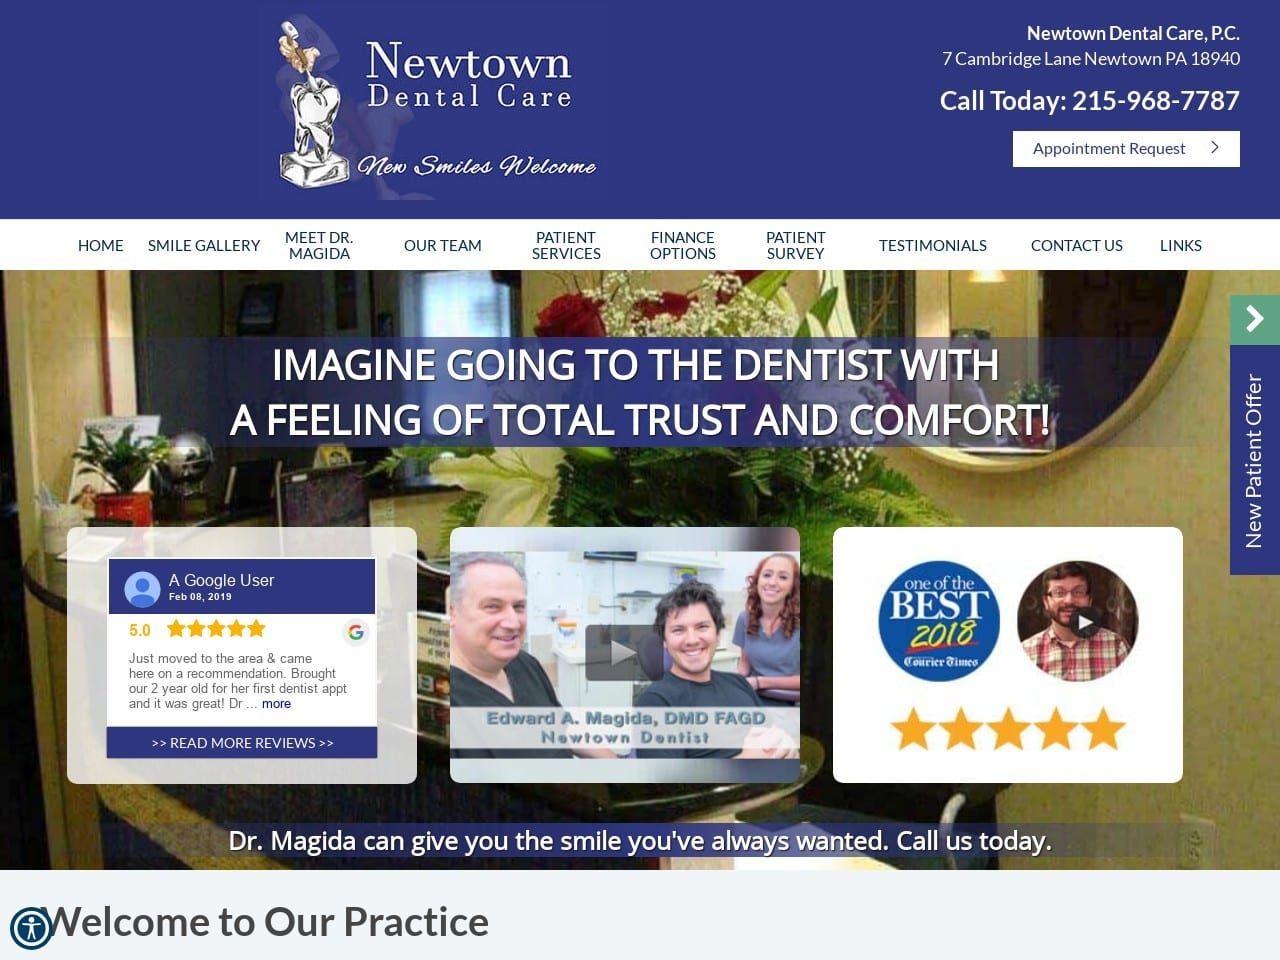 Newtown Dental Care Website Screenshot from newtowndentalcare.com